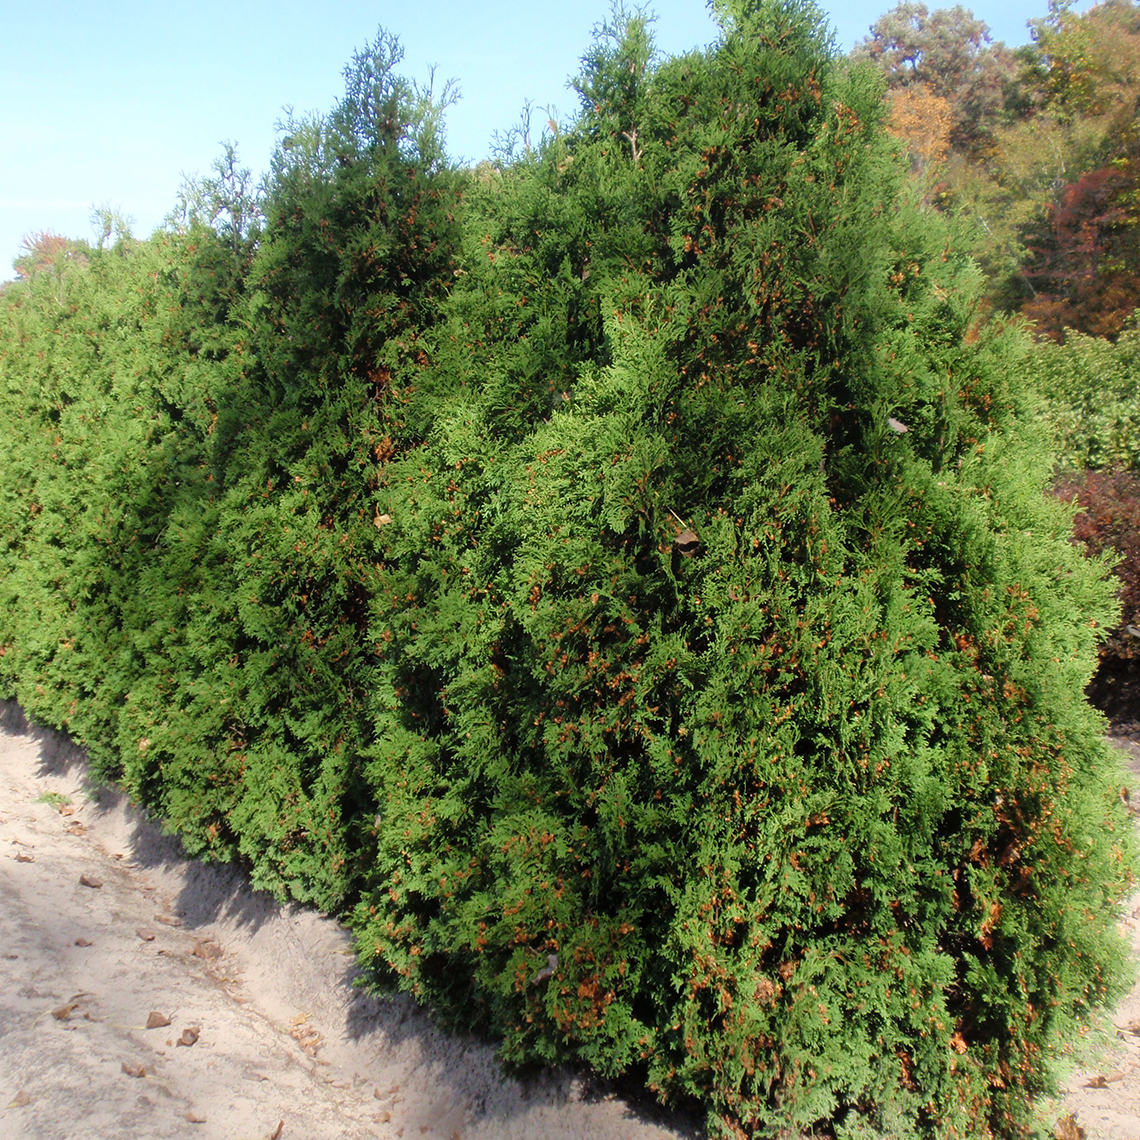 Pyramidalis arborvitae is a basic evergreen for hedging